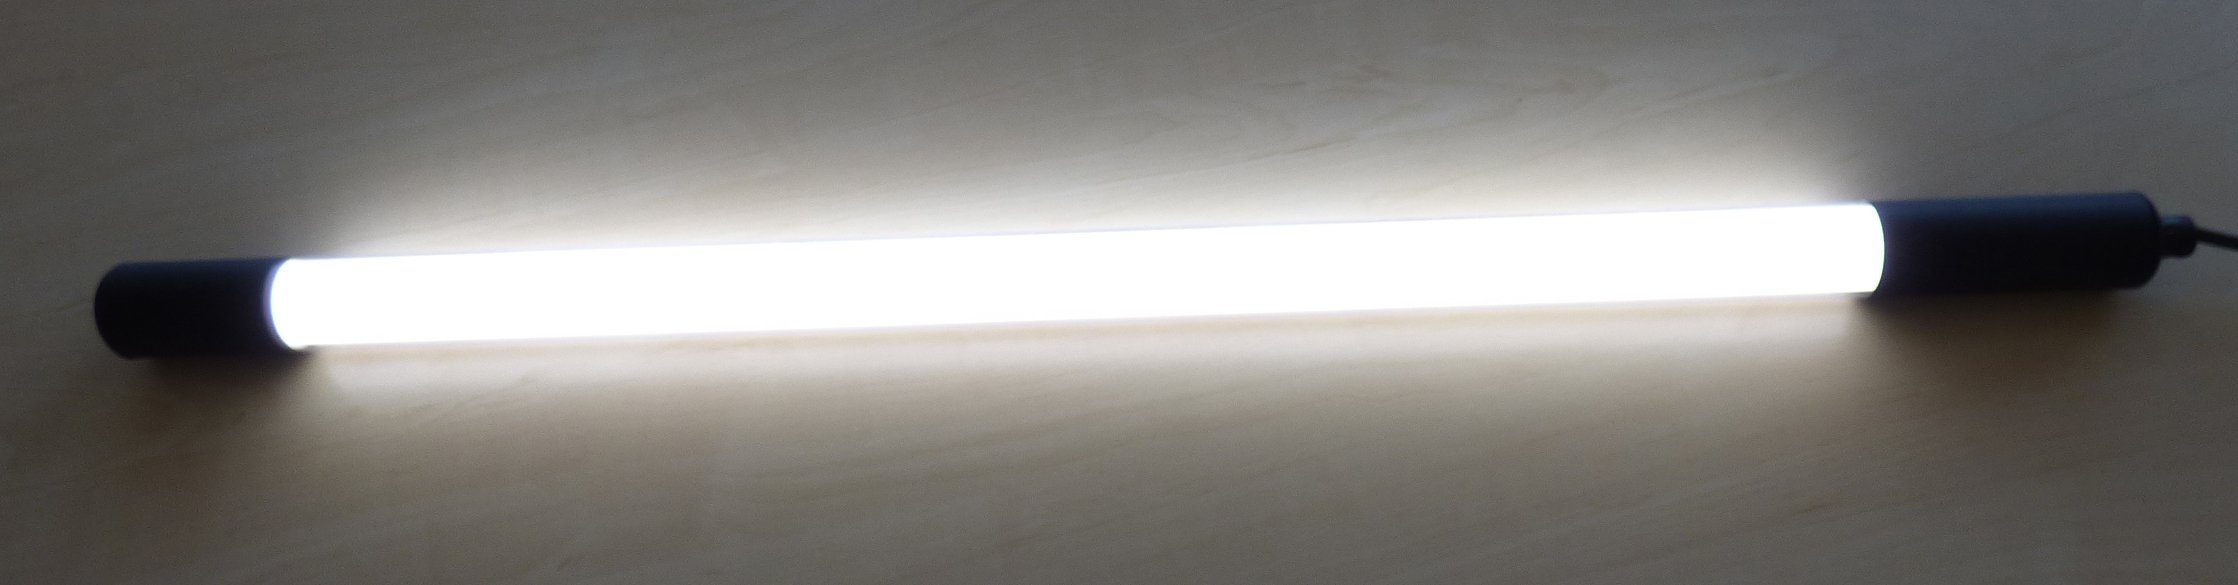 XENON LED Weiß, Röhre LED Slim Ø30mm Leuchtstab Kunststoff Wandleuchte T8, Röhre LED Kalt Xenon Weiß, 63cm 8855 Kalt